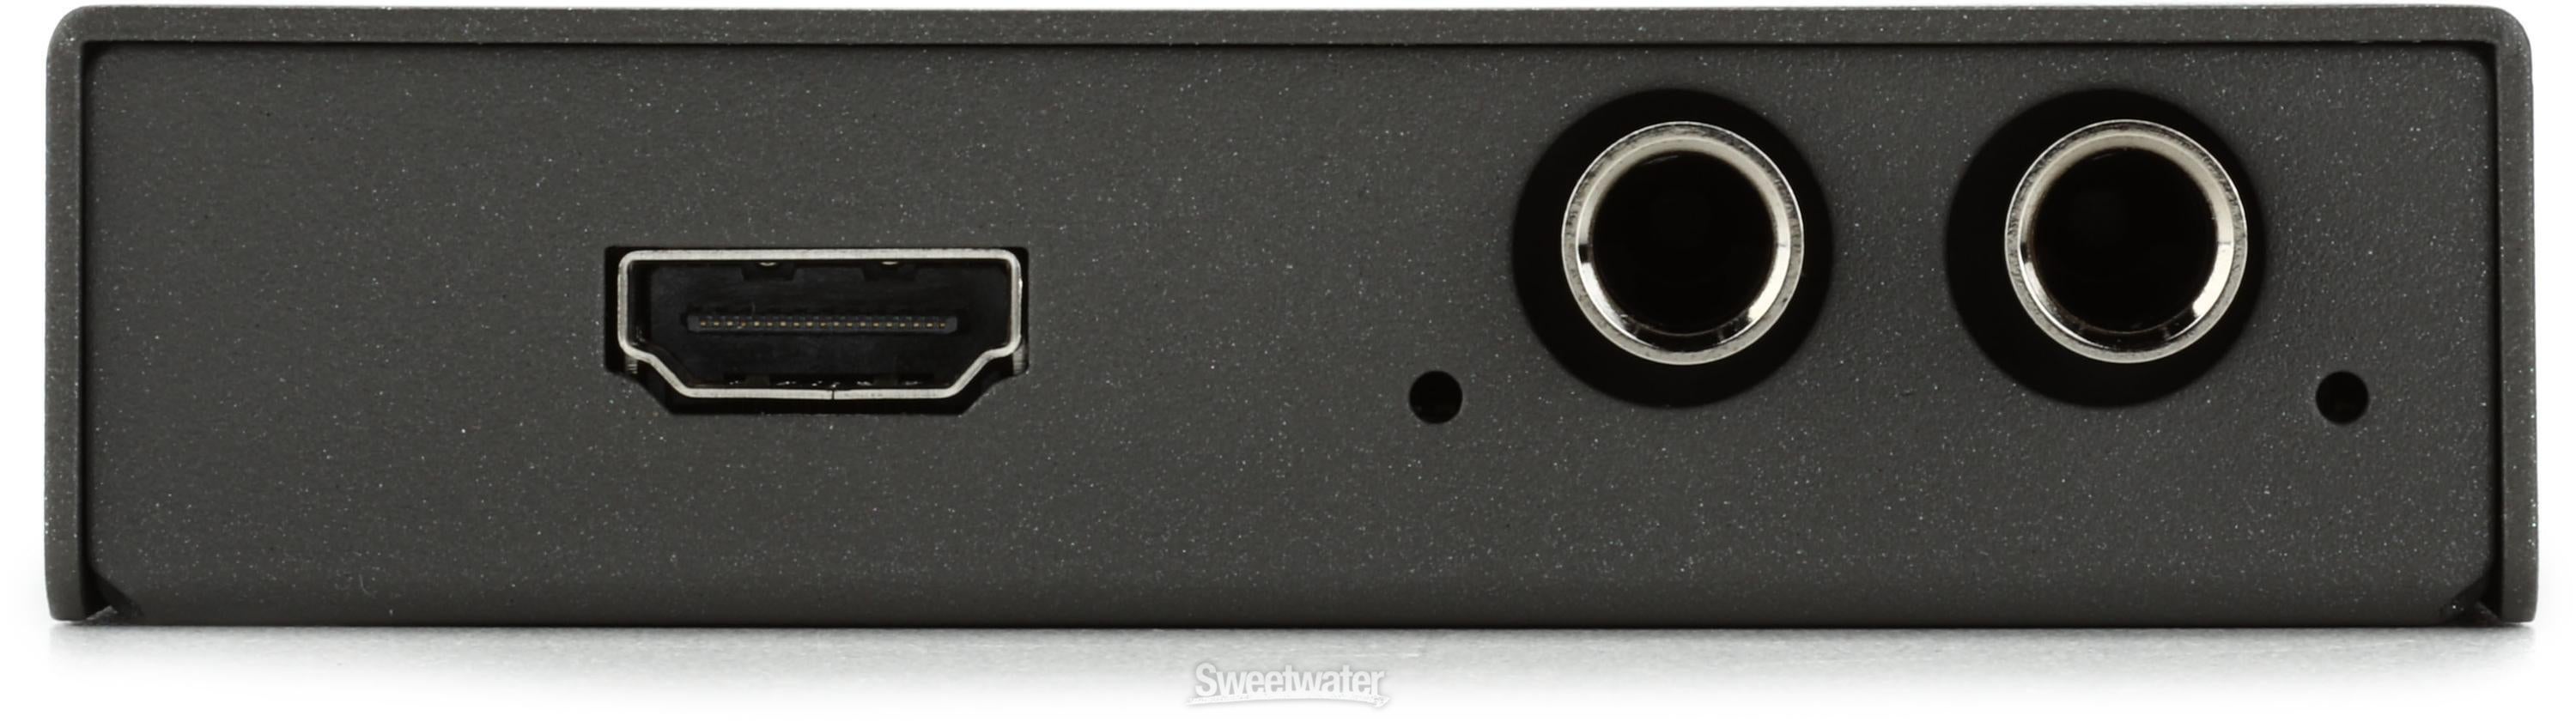 Blackmagic Design Mini Converter HDMI to SDI 6G | Sweetwater